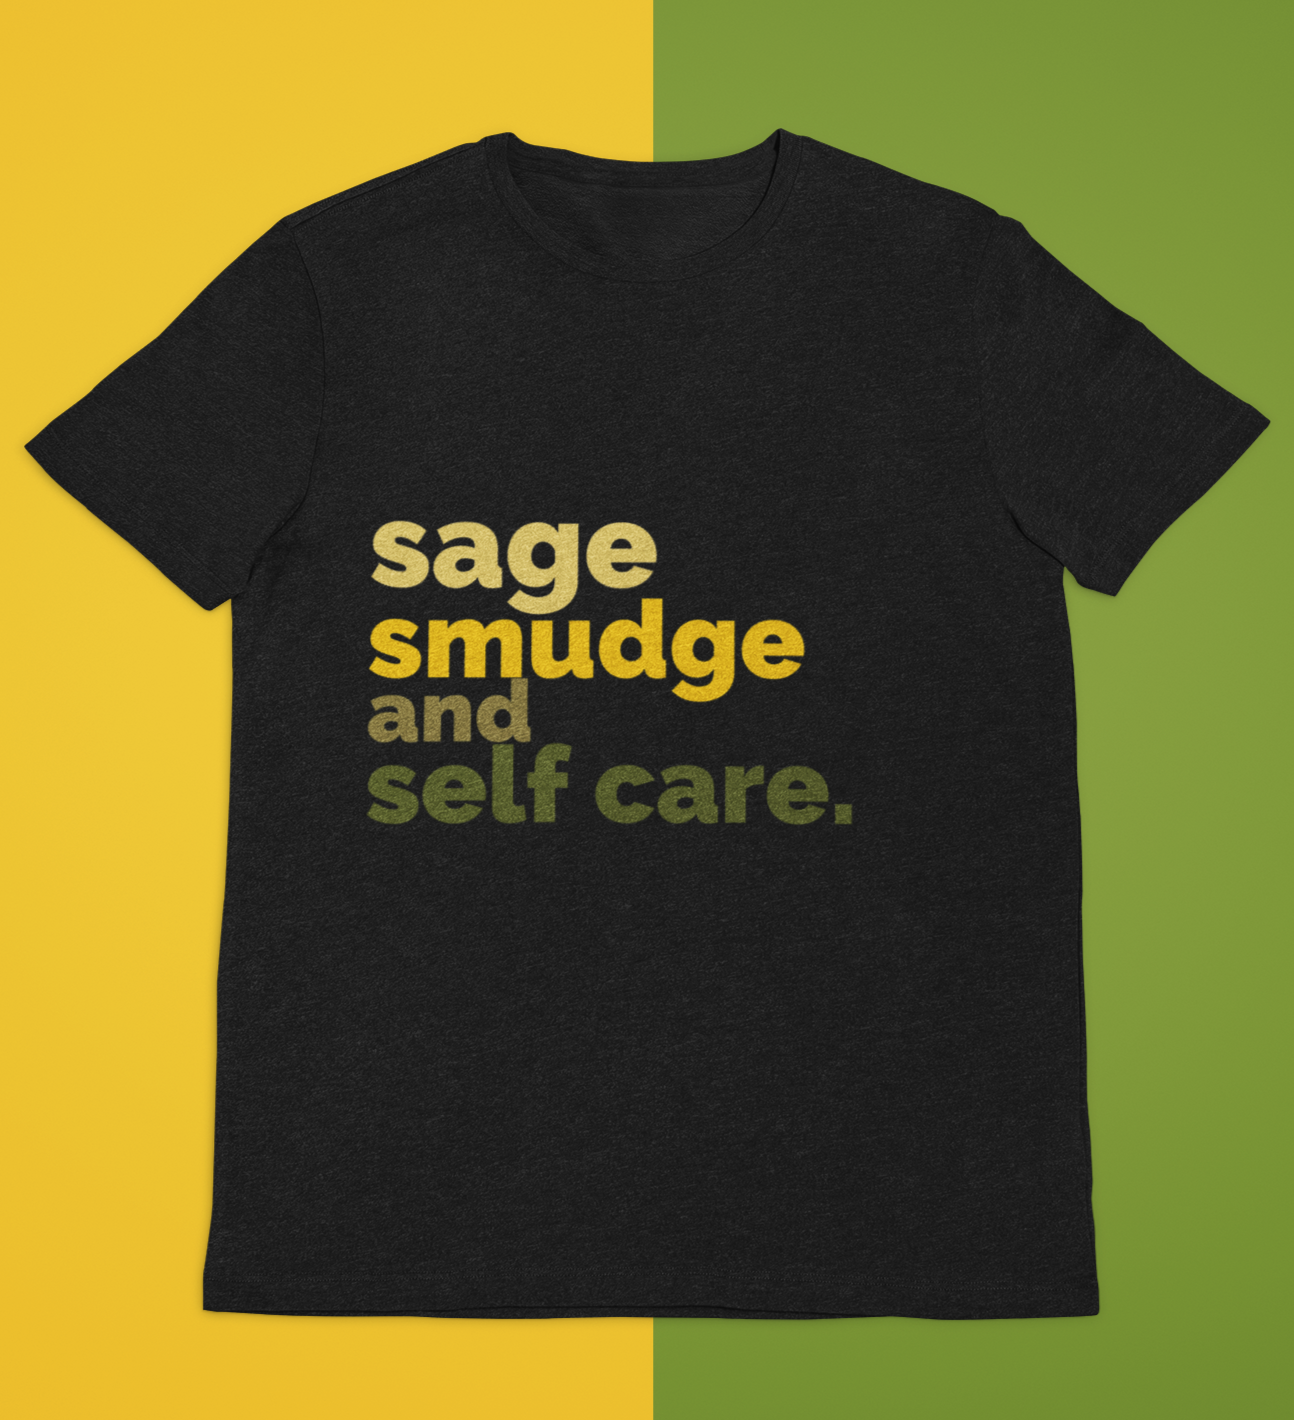 The Sage Tee